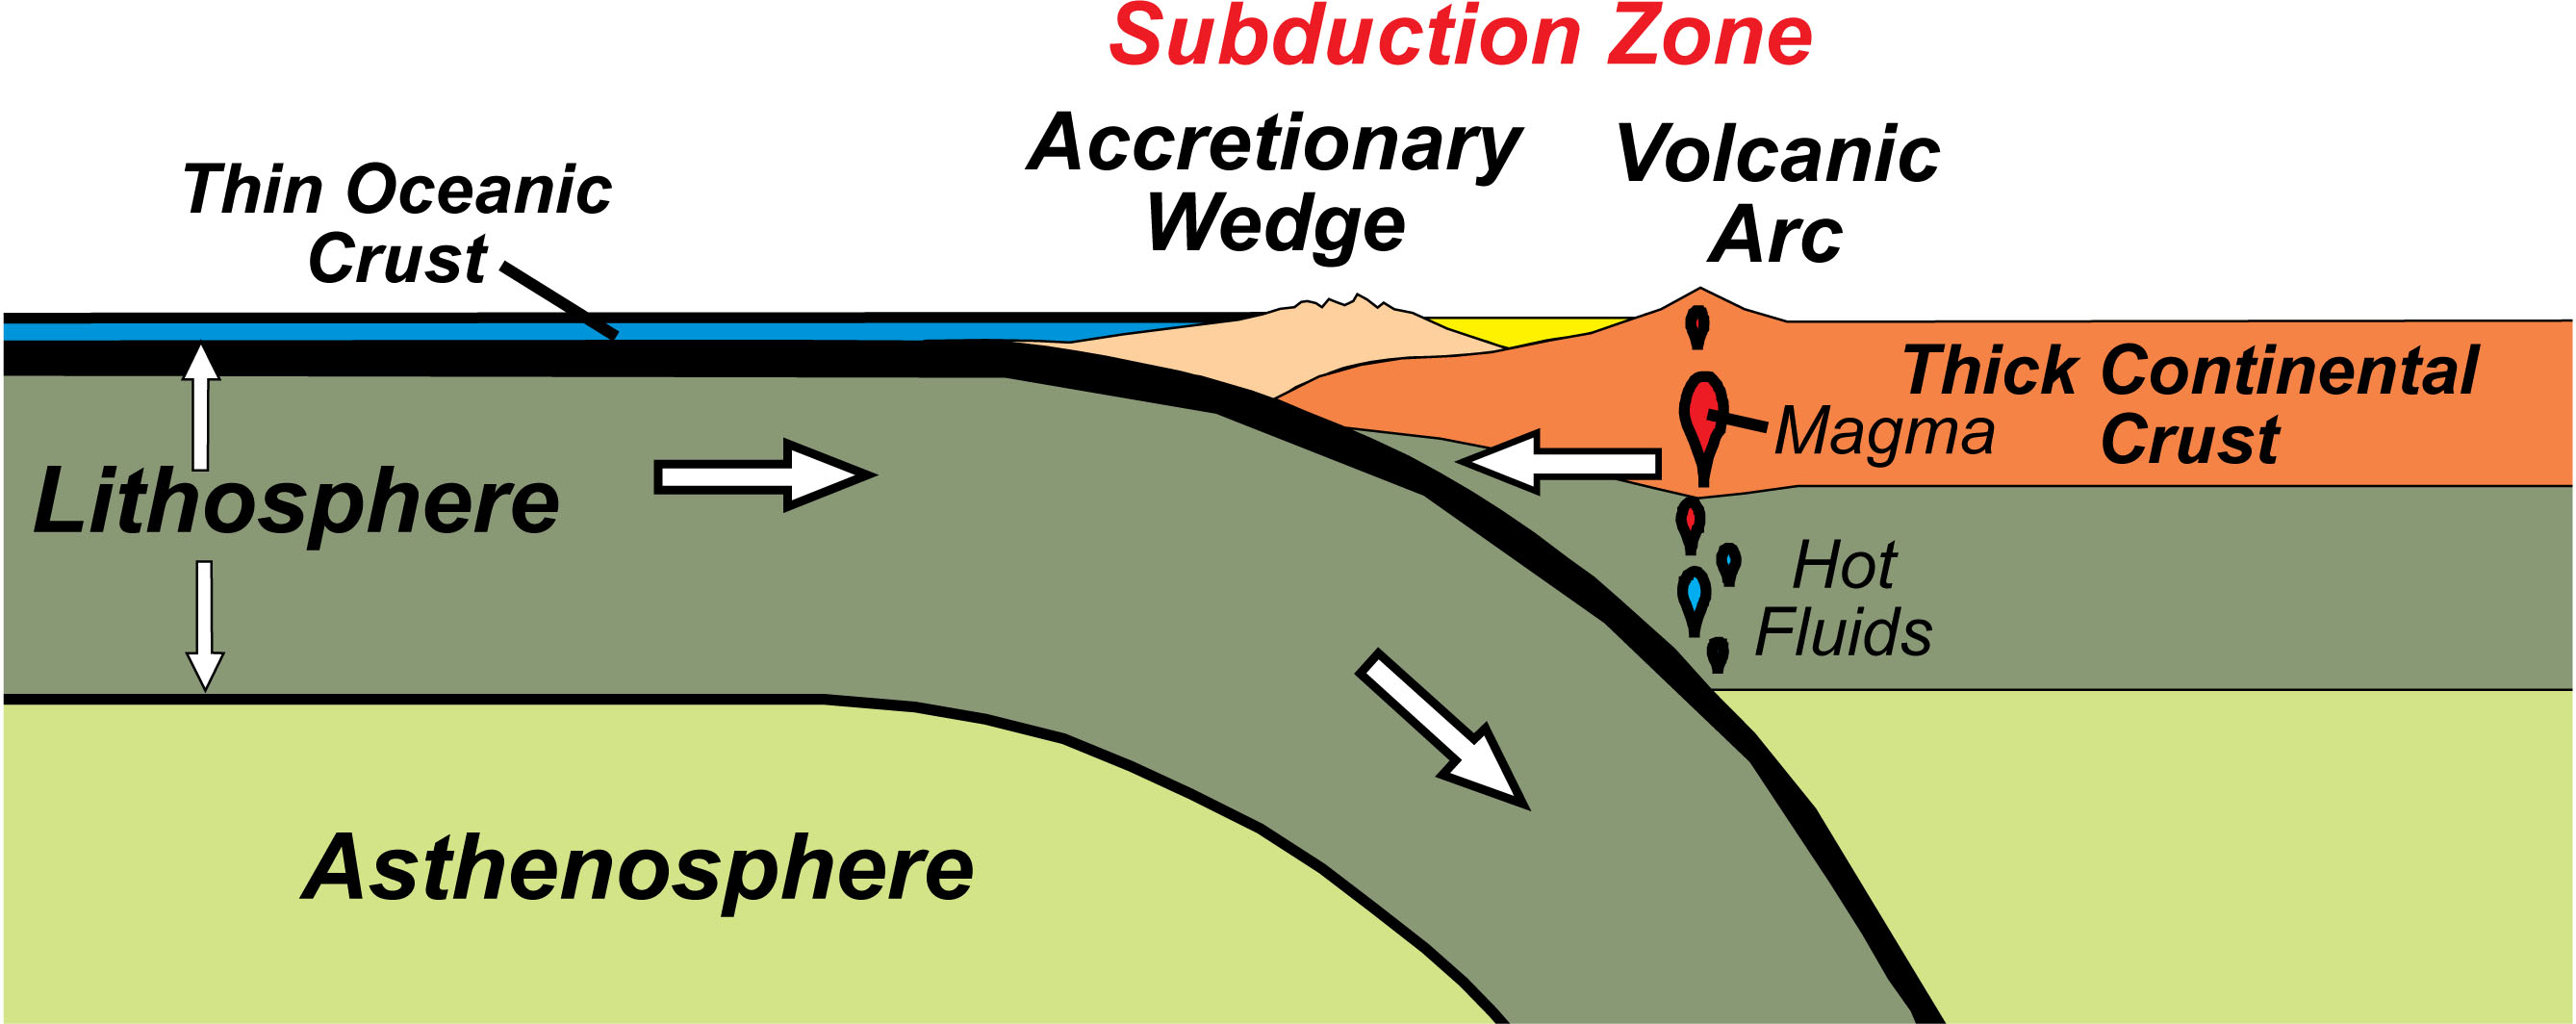 Convergent Plate Boundaries Geology U S National Park Service